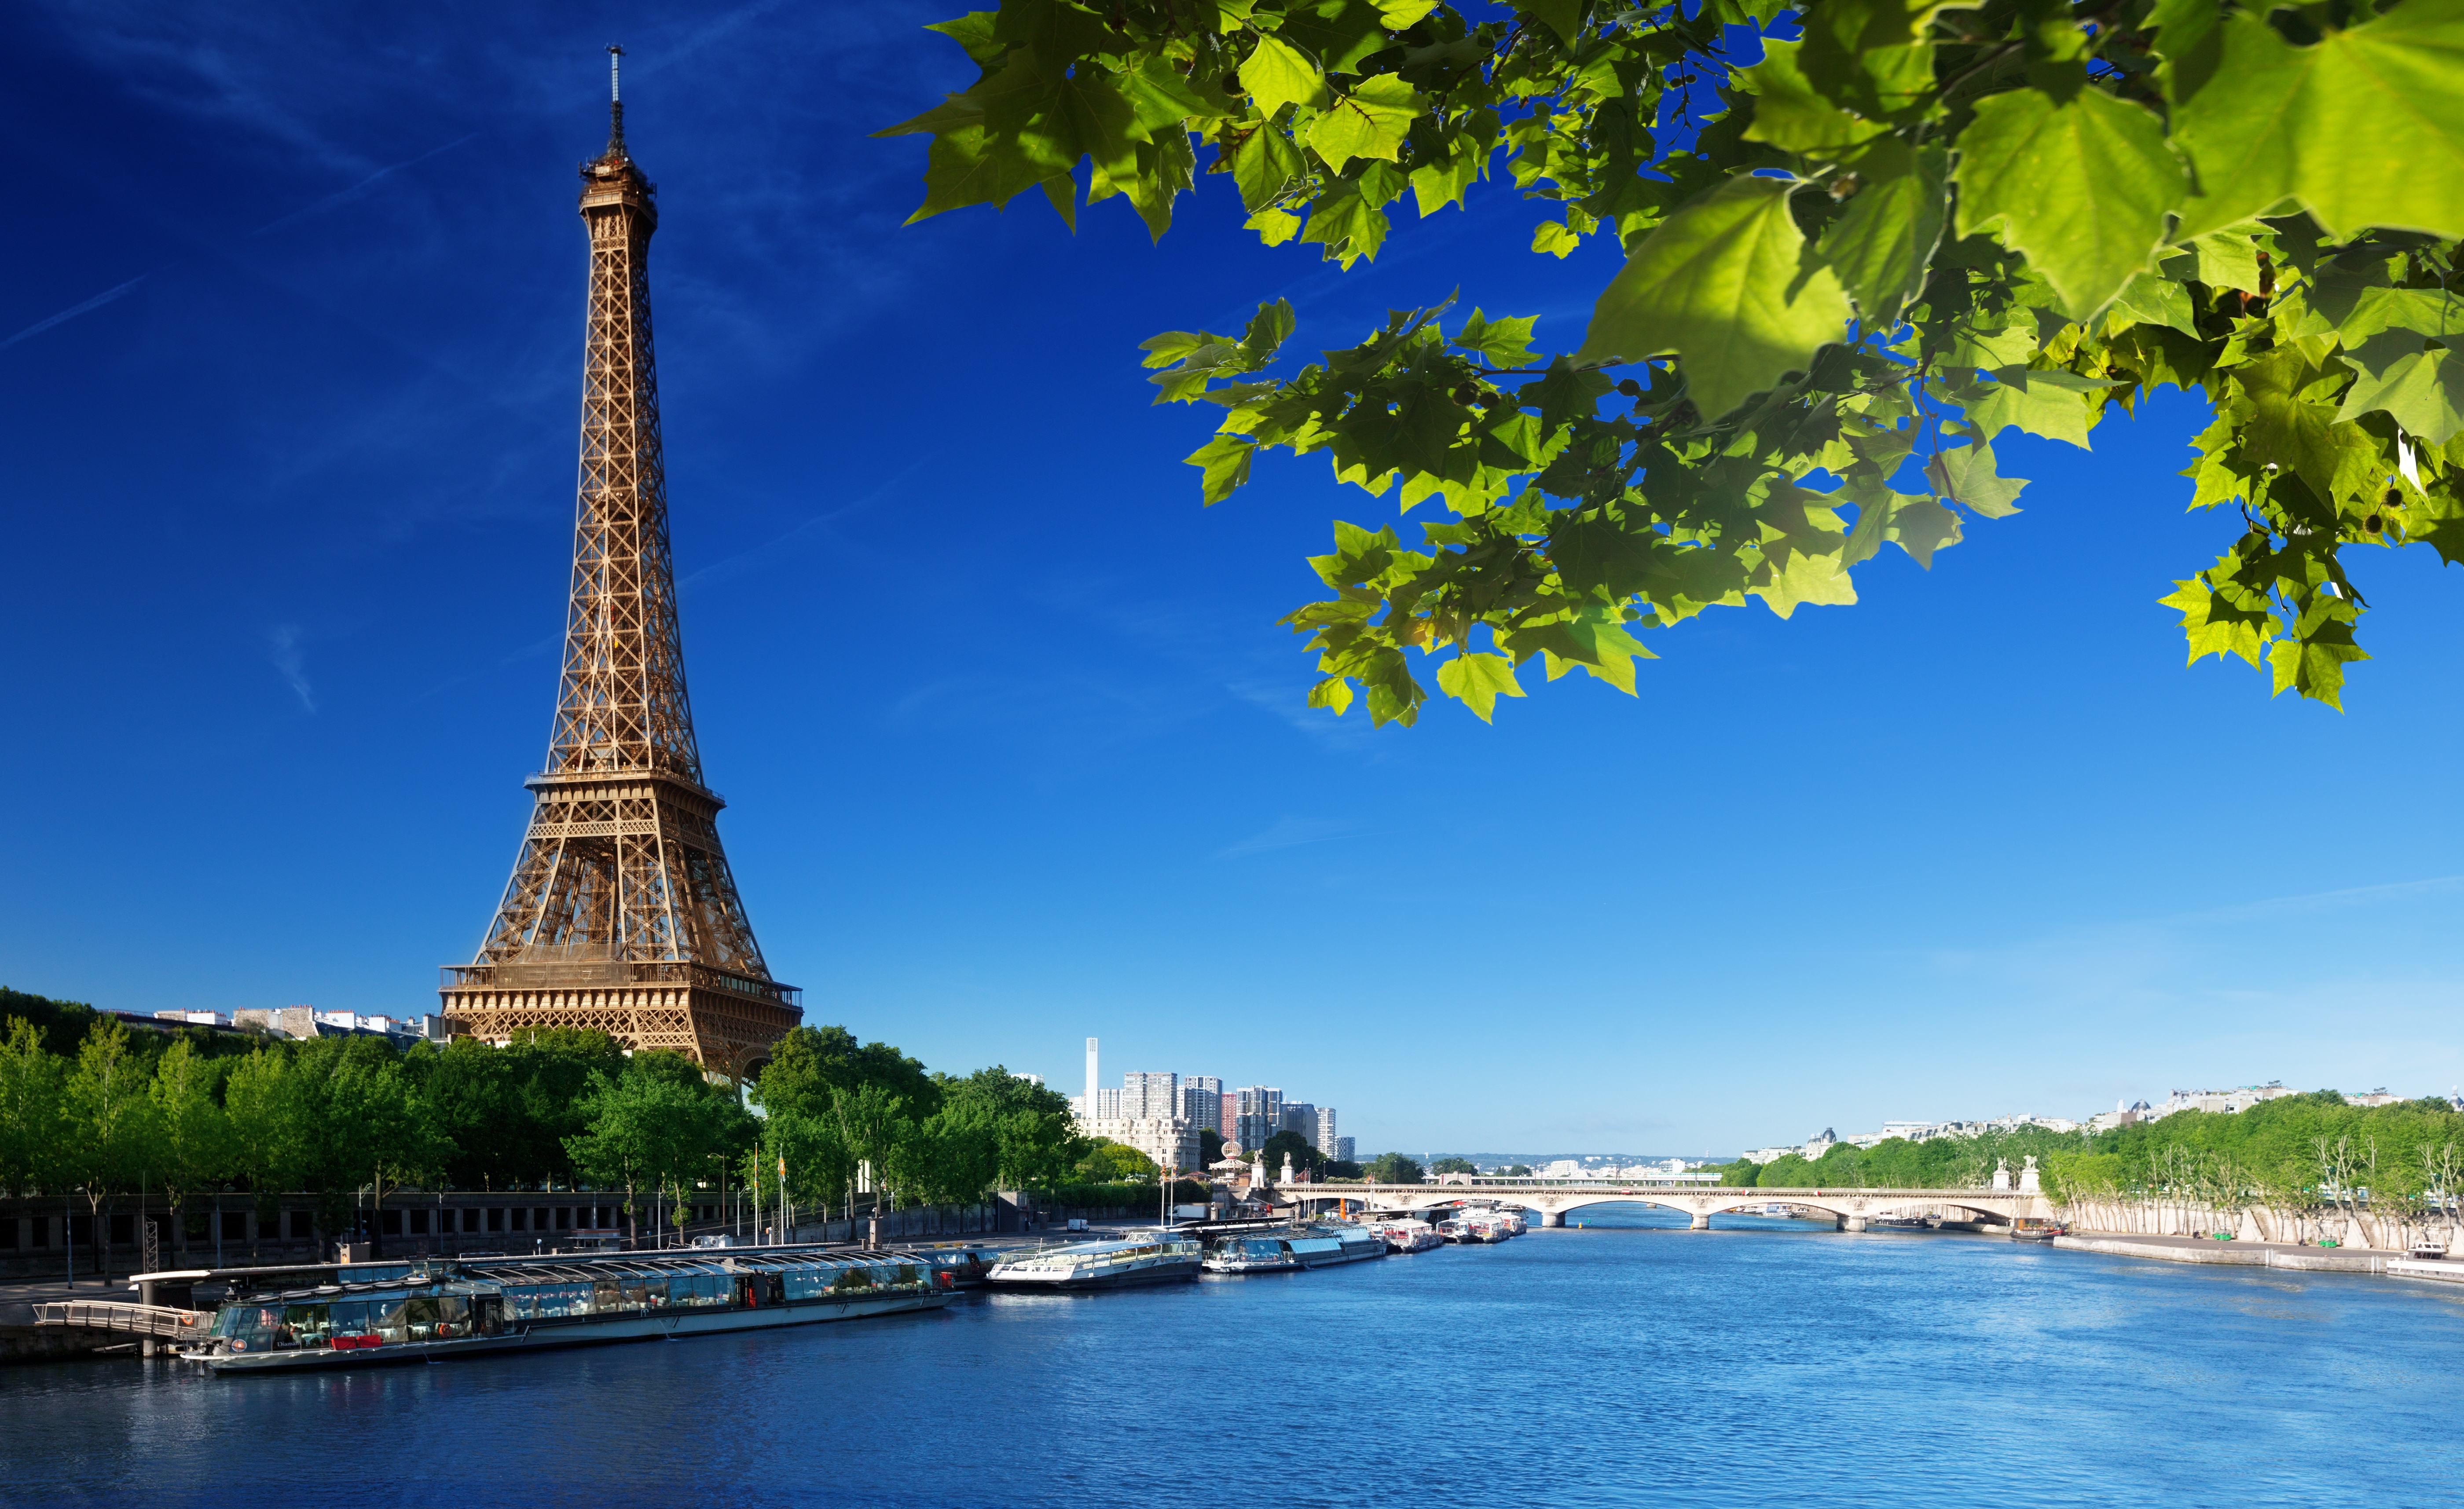 страны архитектура Эйфелева башня париж франция без смс